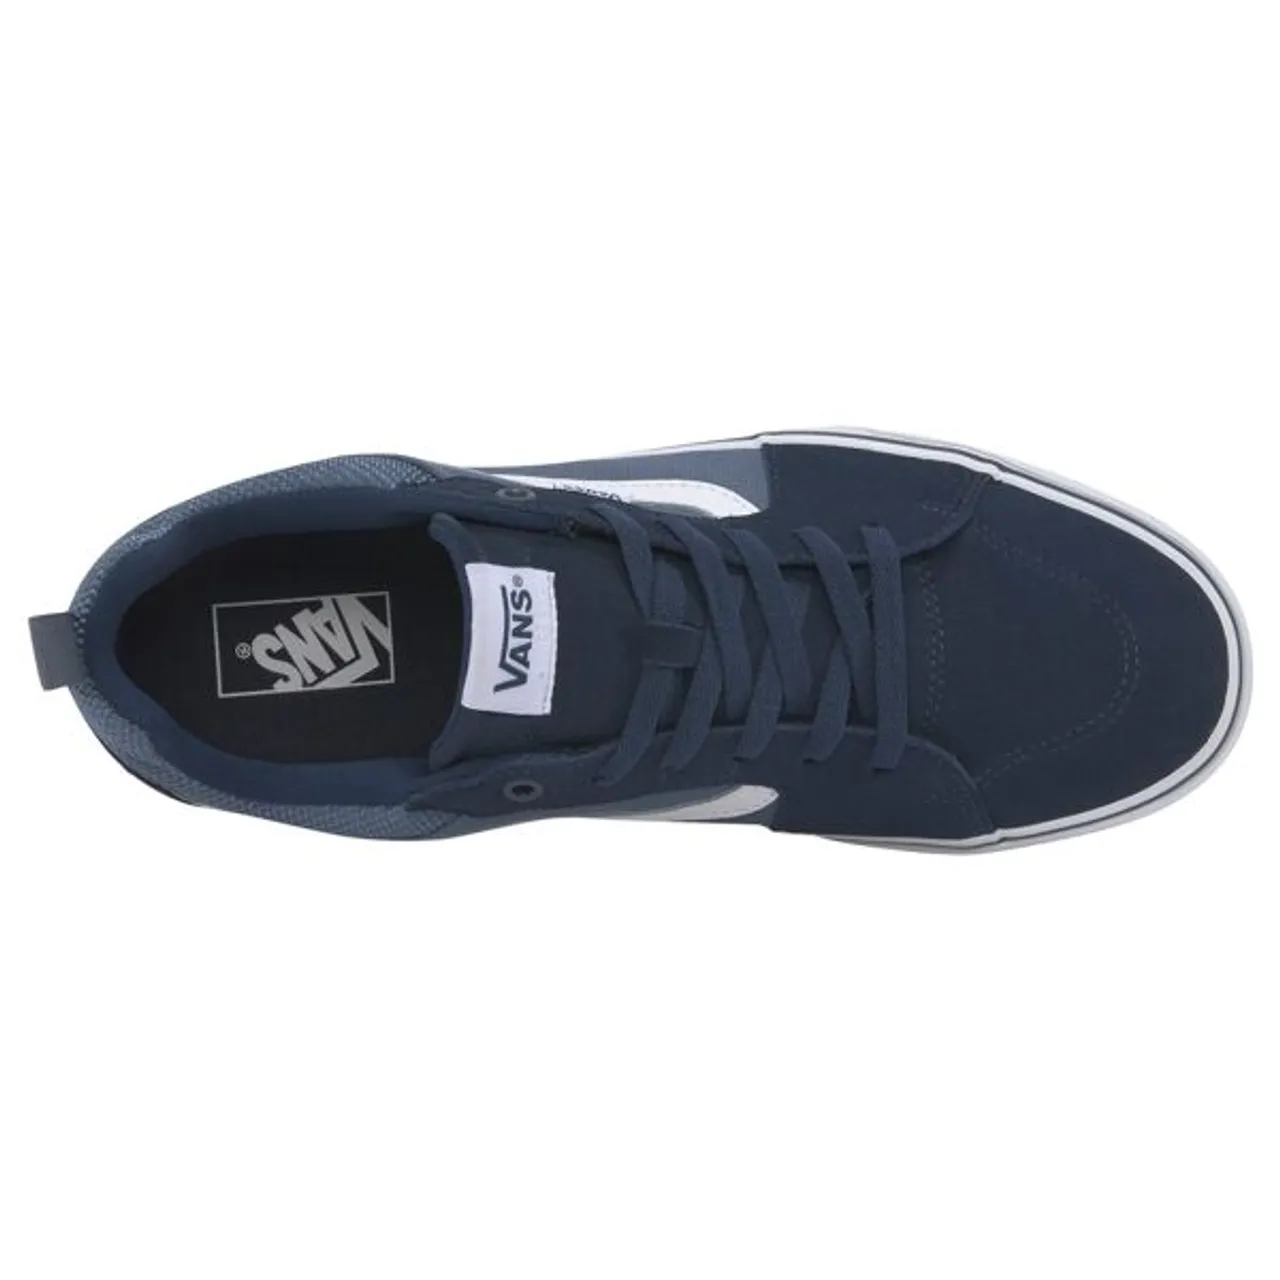 Sneaker VANS "Filmore" Gr. 40, blau (navy, blau) Schuhe Sneaker low Skaterschuh Schnürhalbschuhe